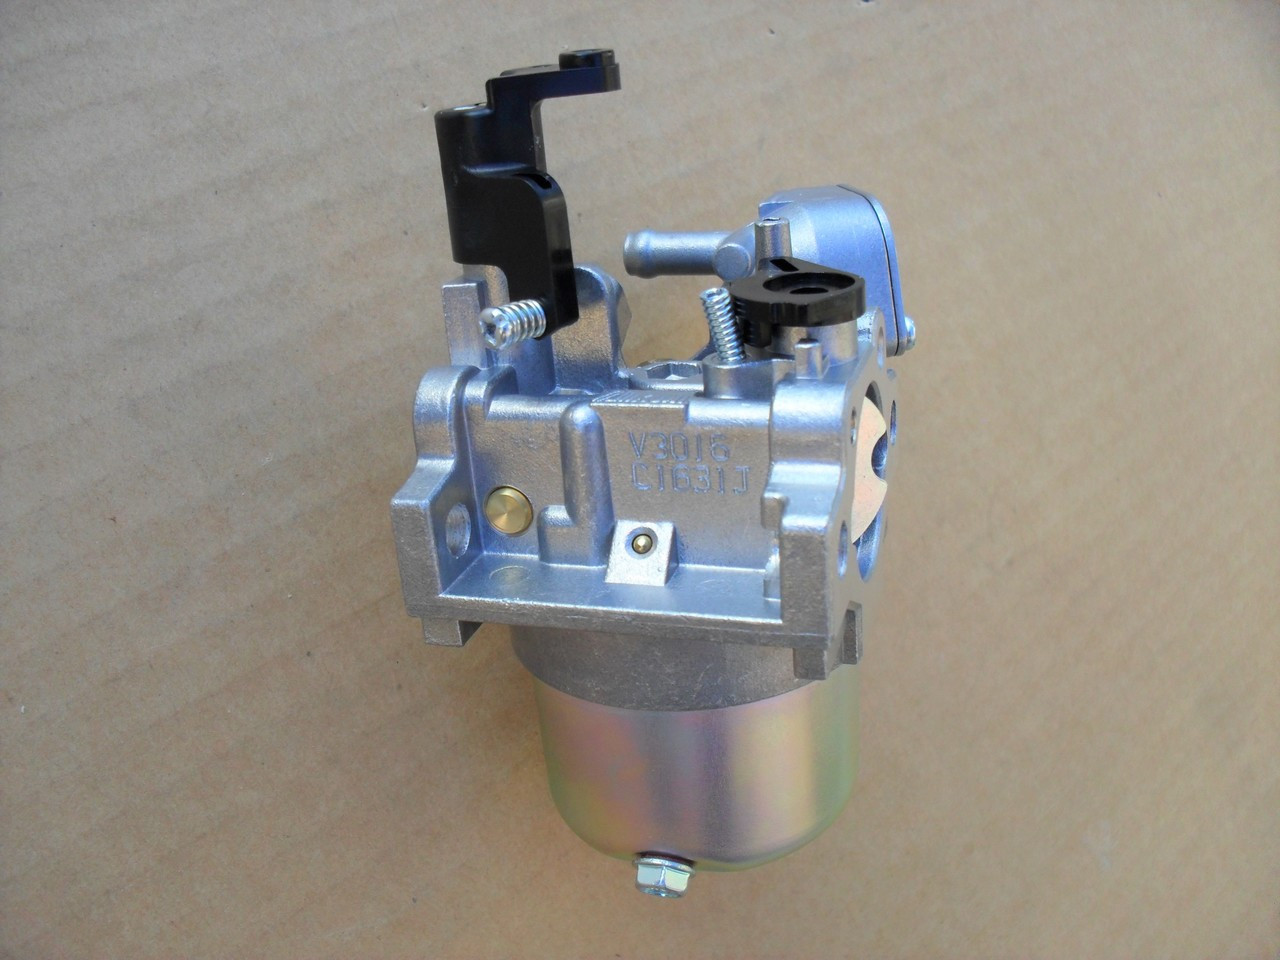 Carburetor for Subaru Robin EX21, 2786230100, 2786230110, 2786230120, 2786230130, 2786230140, 2786230150, 2786230160, 278-62301-00, 278-62301-10, 278-62301-20, 278-62301-30, 278-62301-40, 278-62301-50, 278-62301-60